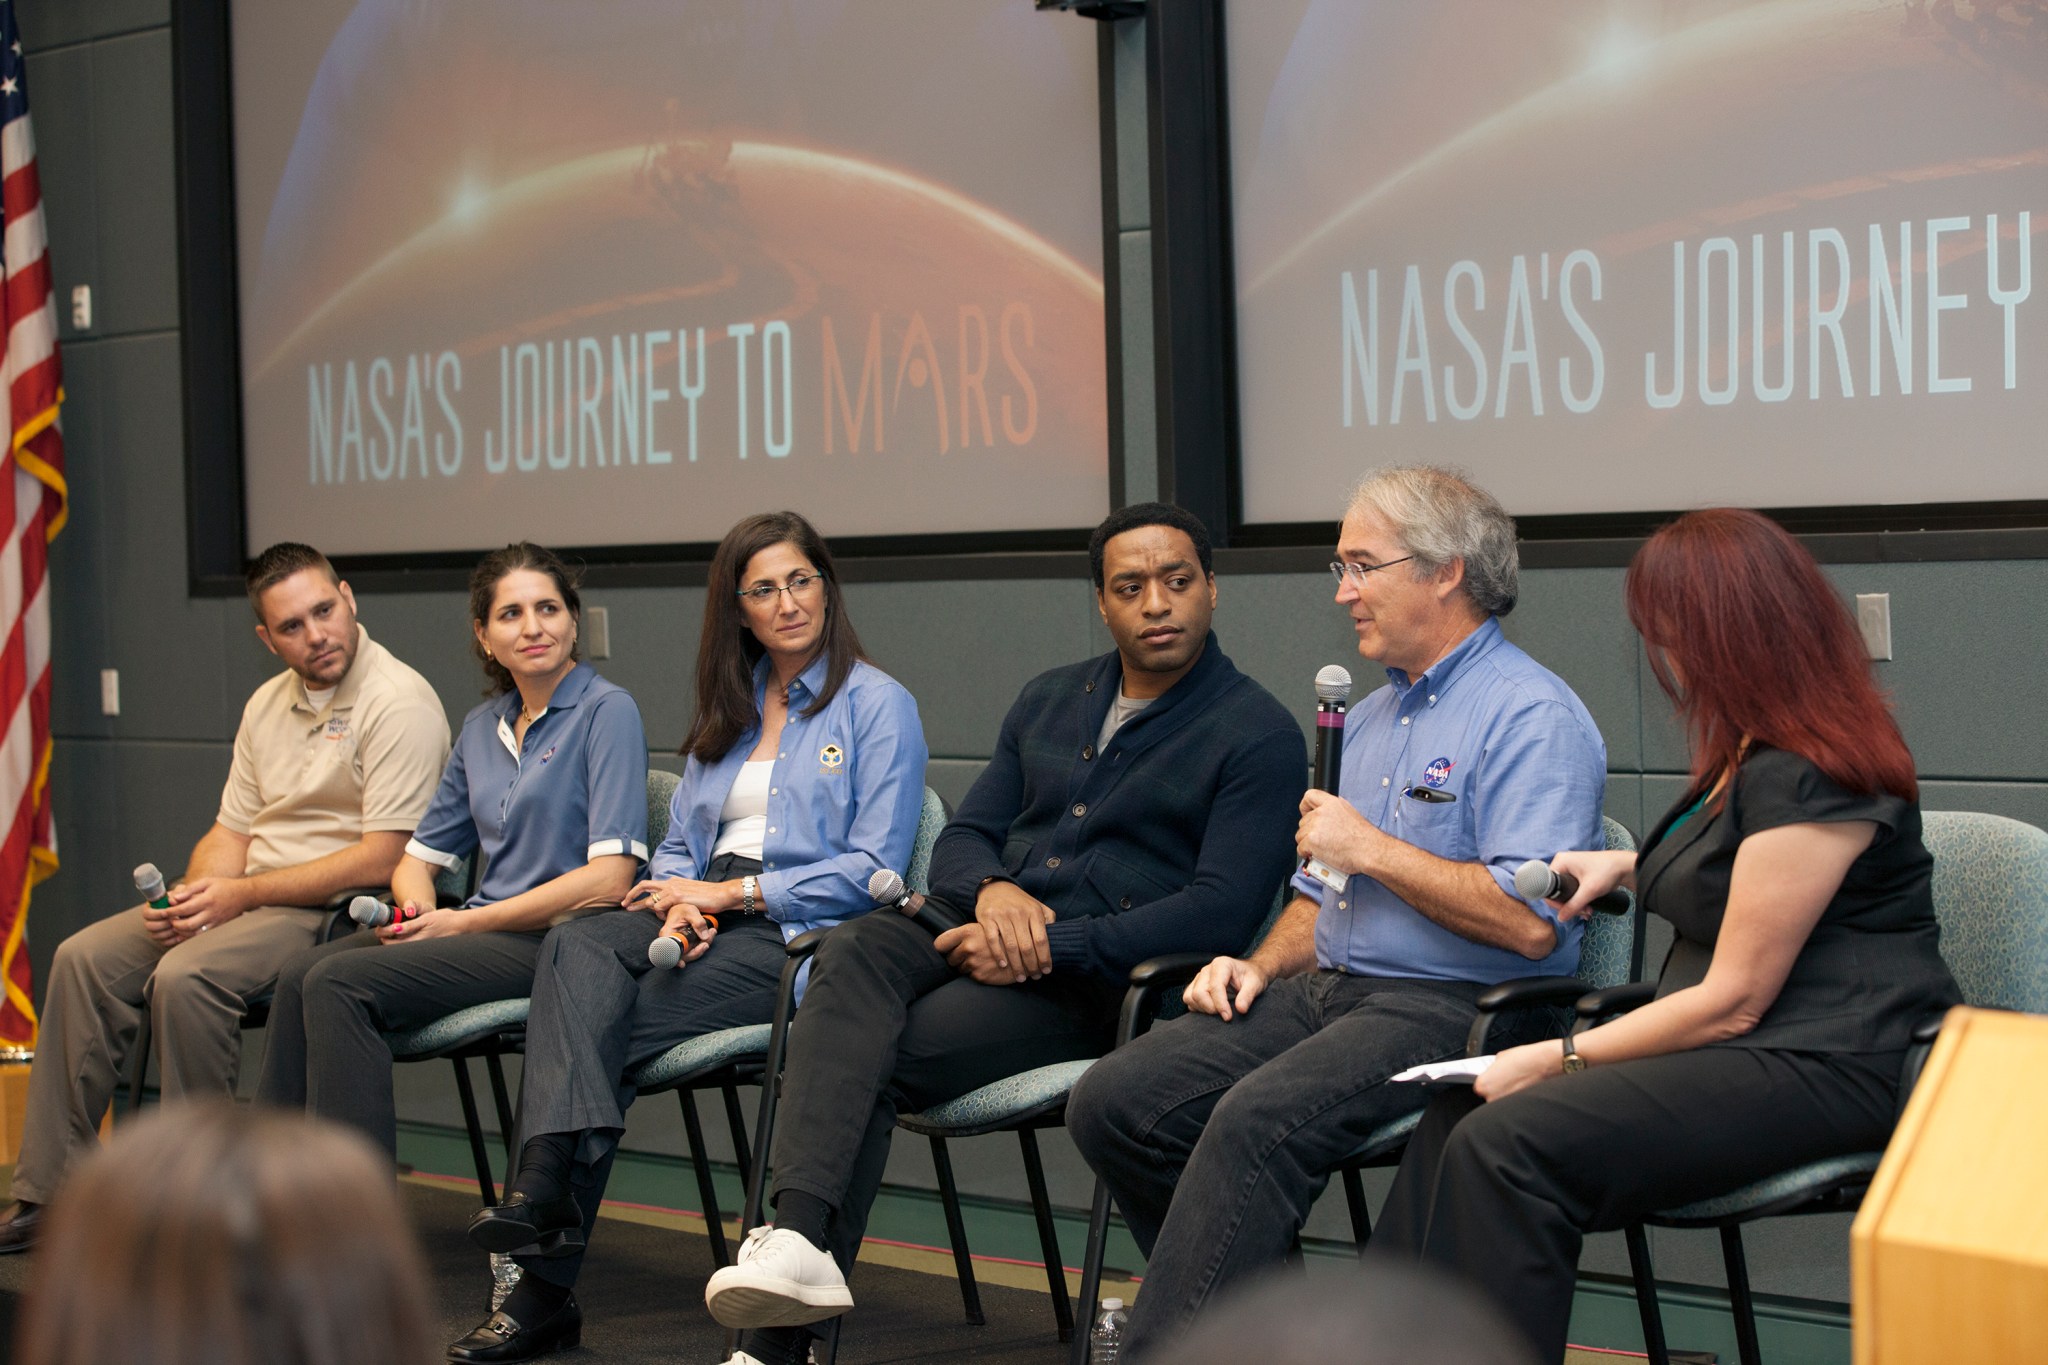 A panel discusses Mars exploration